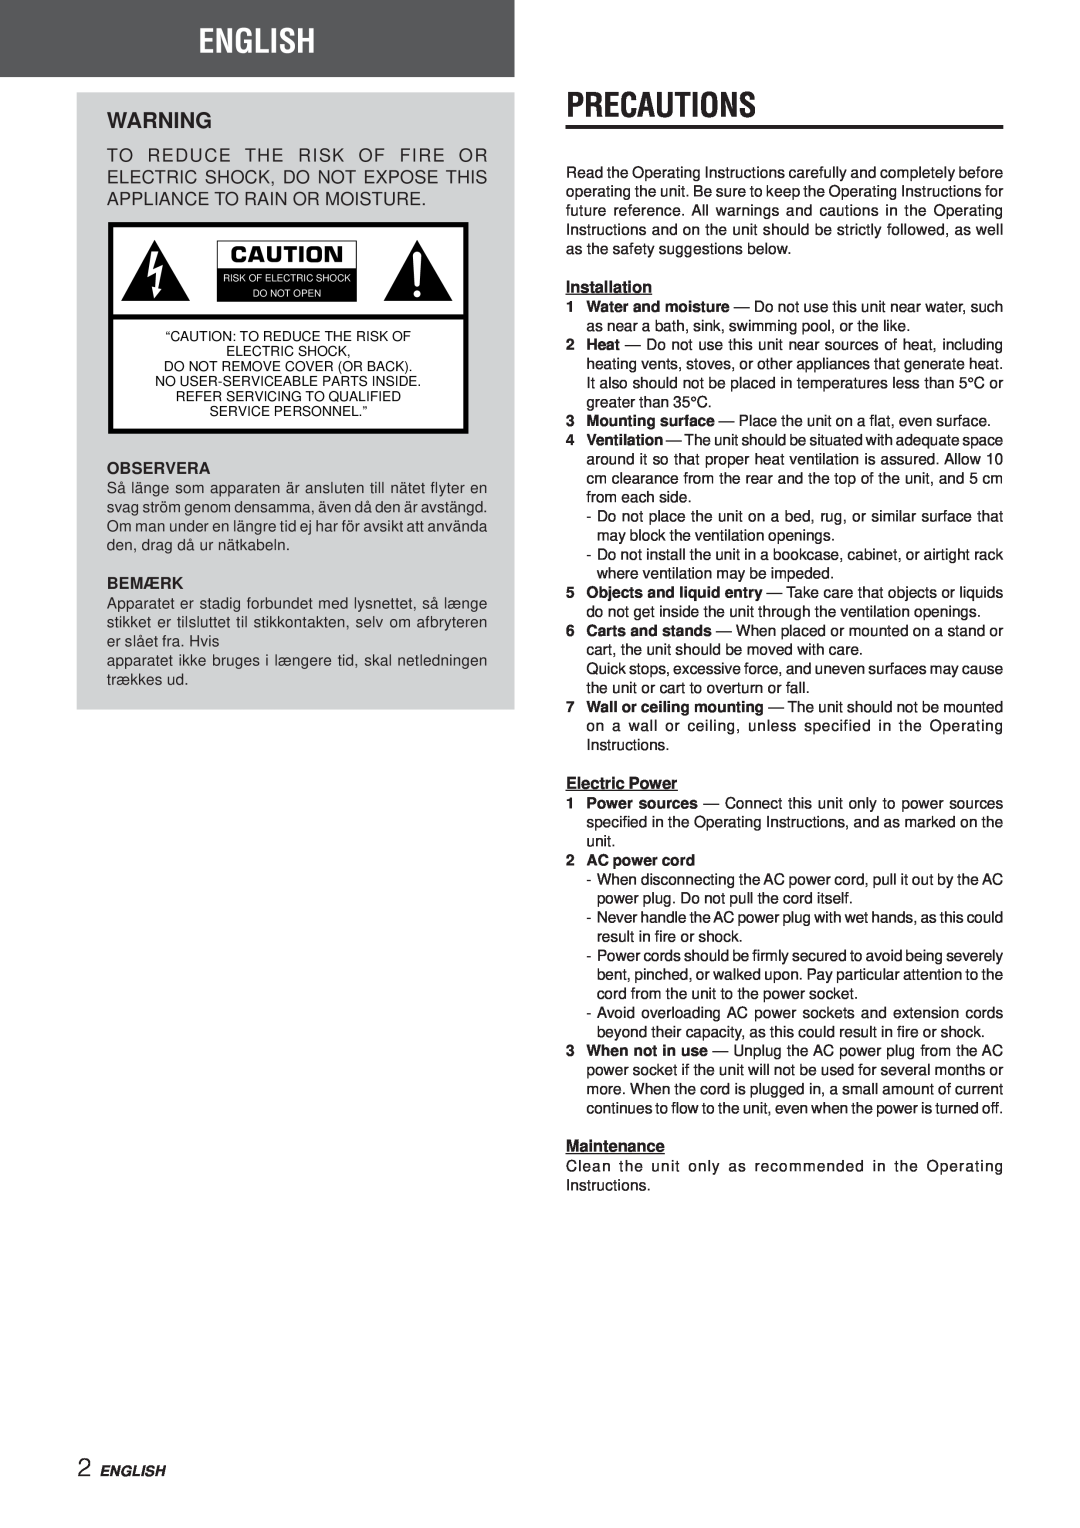 Aiwa AV-NW50 manual Precautions, English, Observera, Bemærk, Installation, Electric Power, Maintenance 